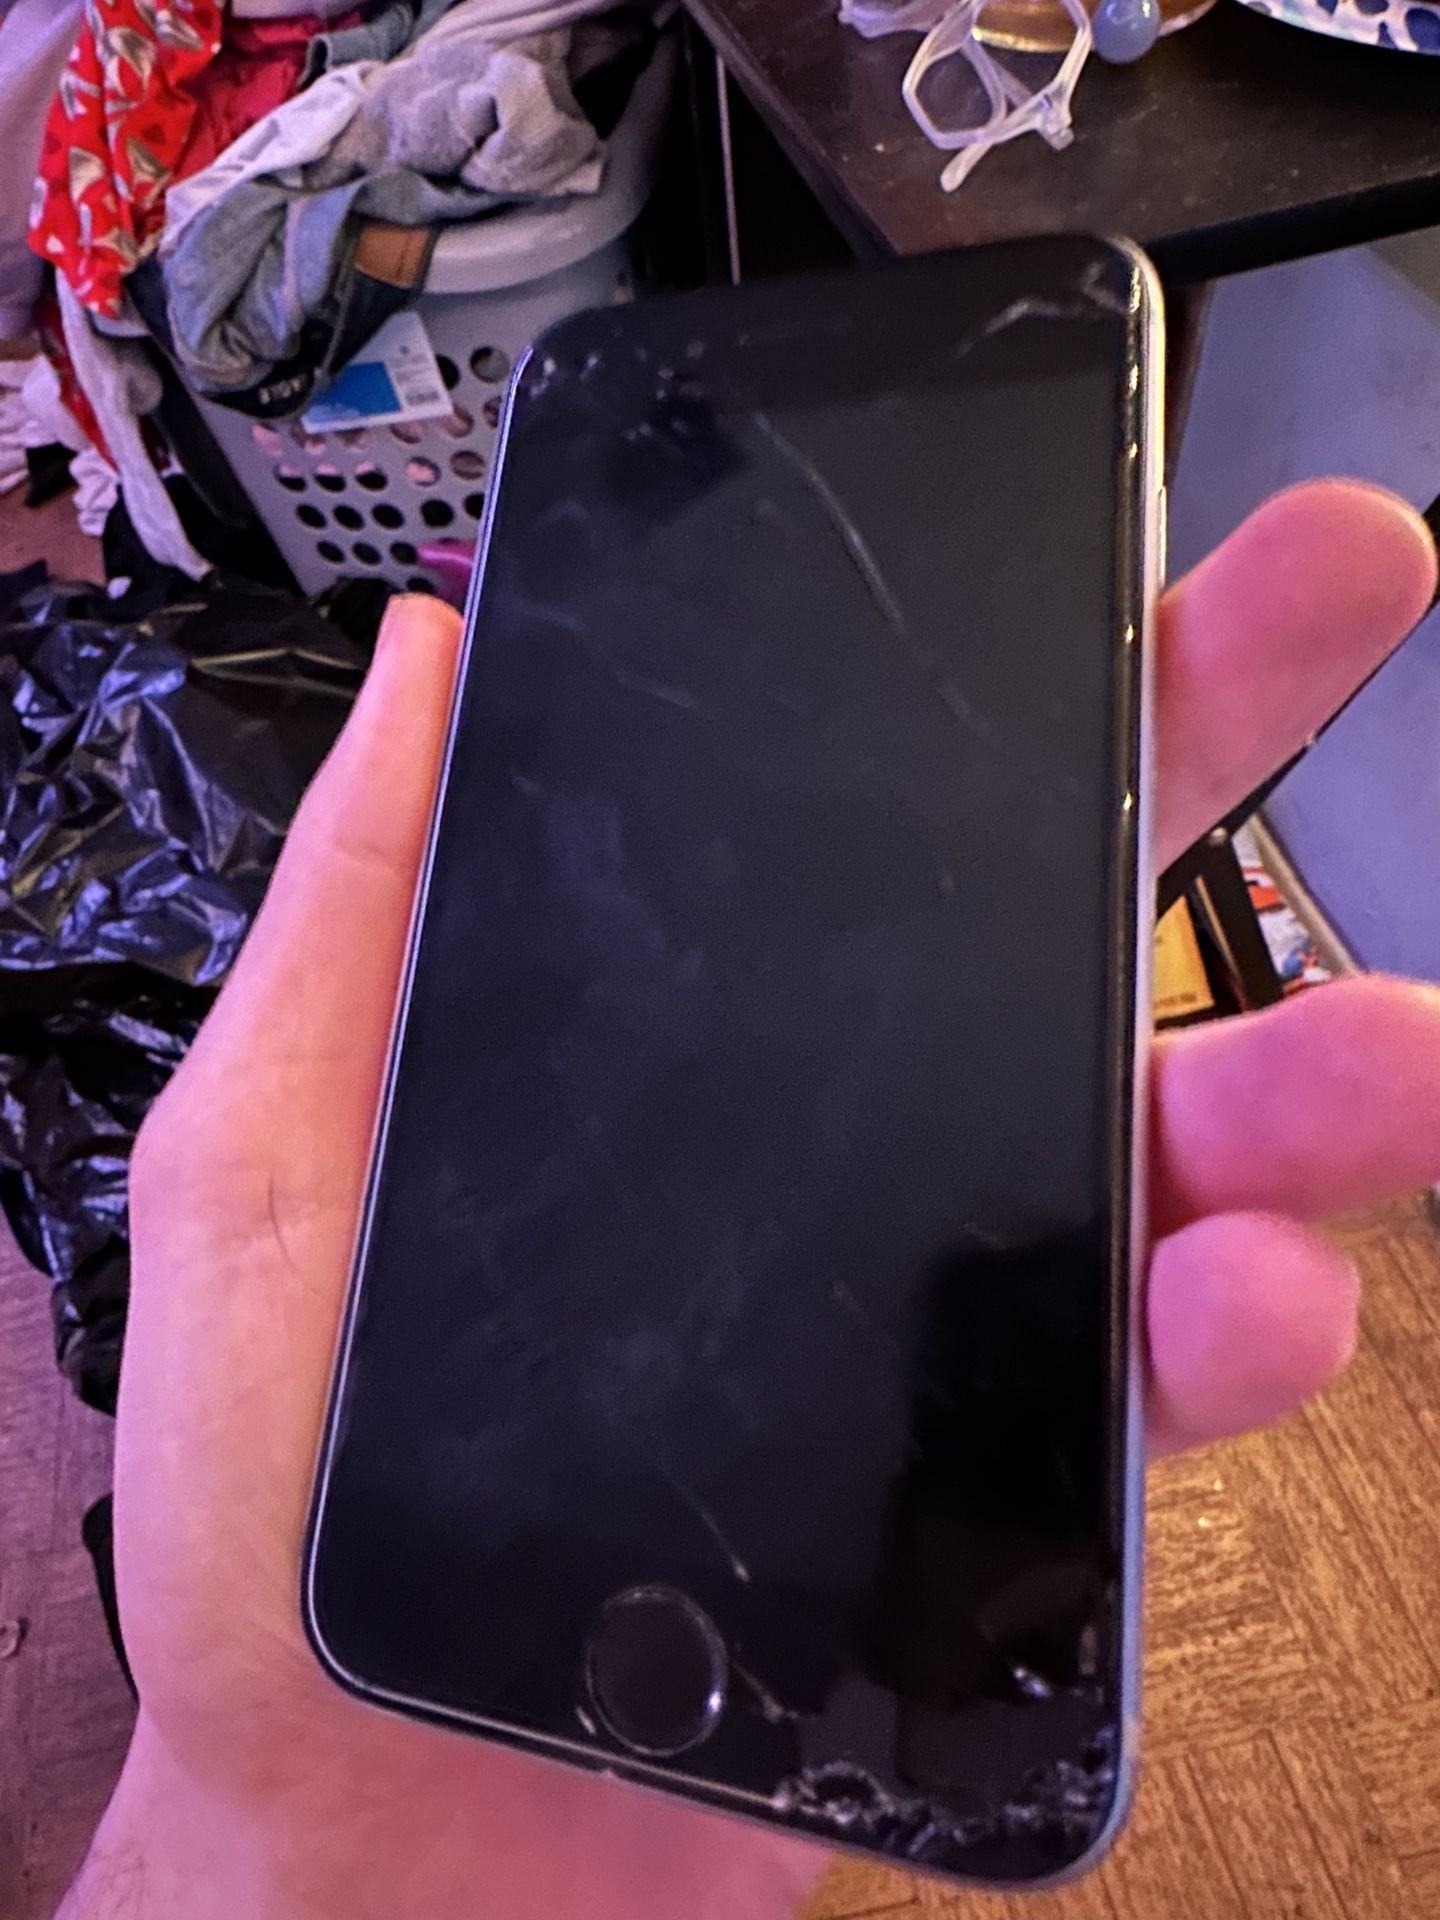 iphone 6 S unlocked (cracked screen)